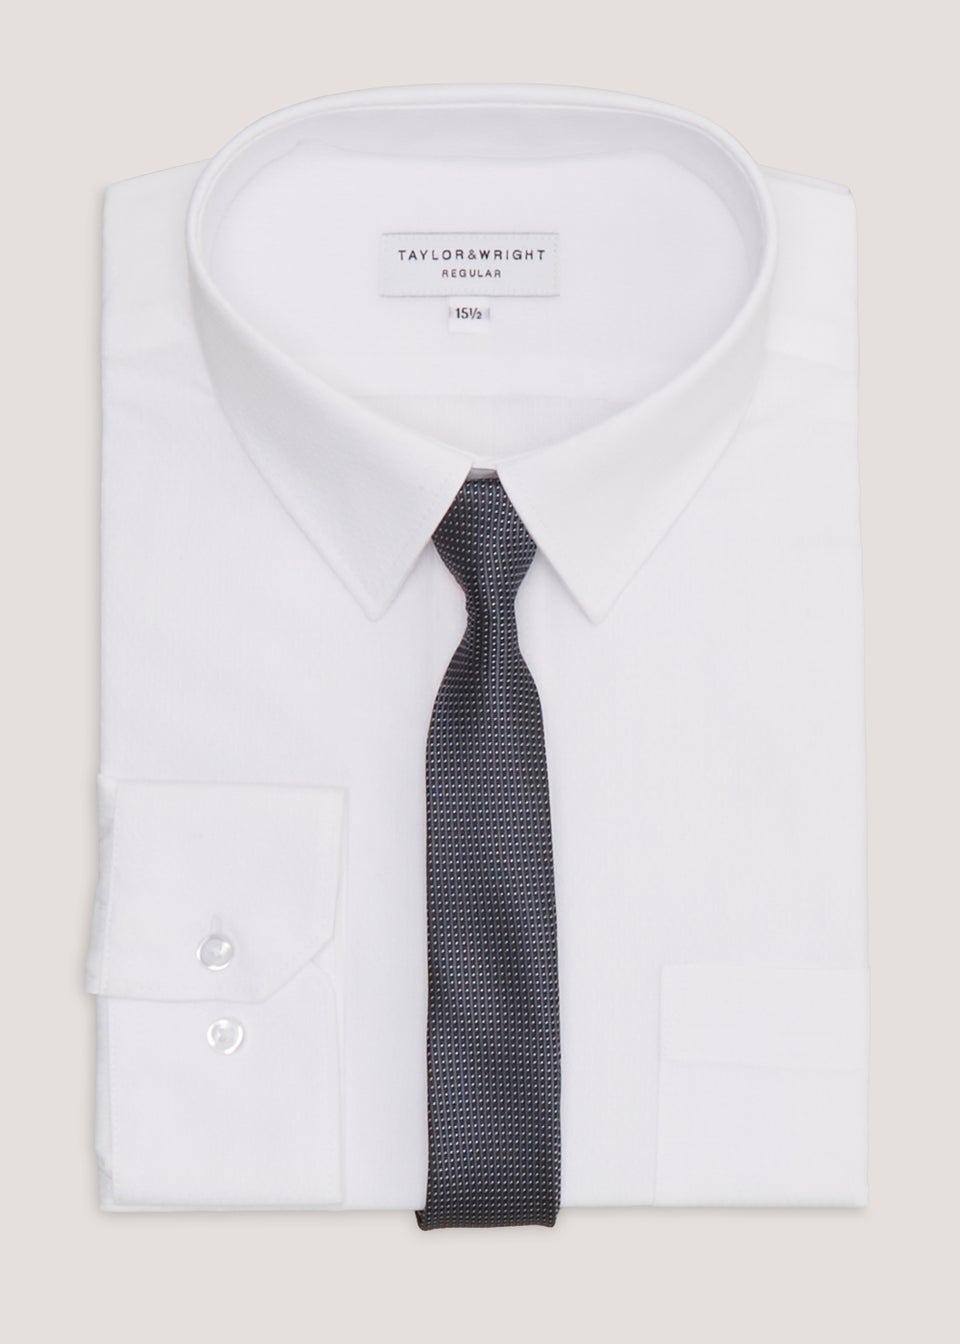 Taylor & Wright White Textured Regular Fit Shirt & Tie Set